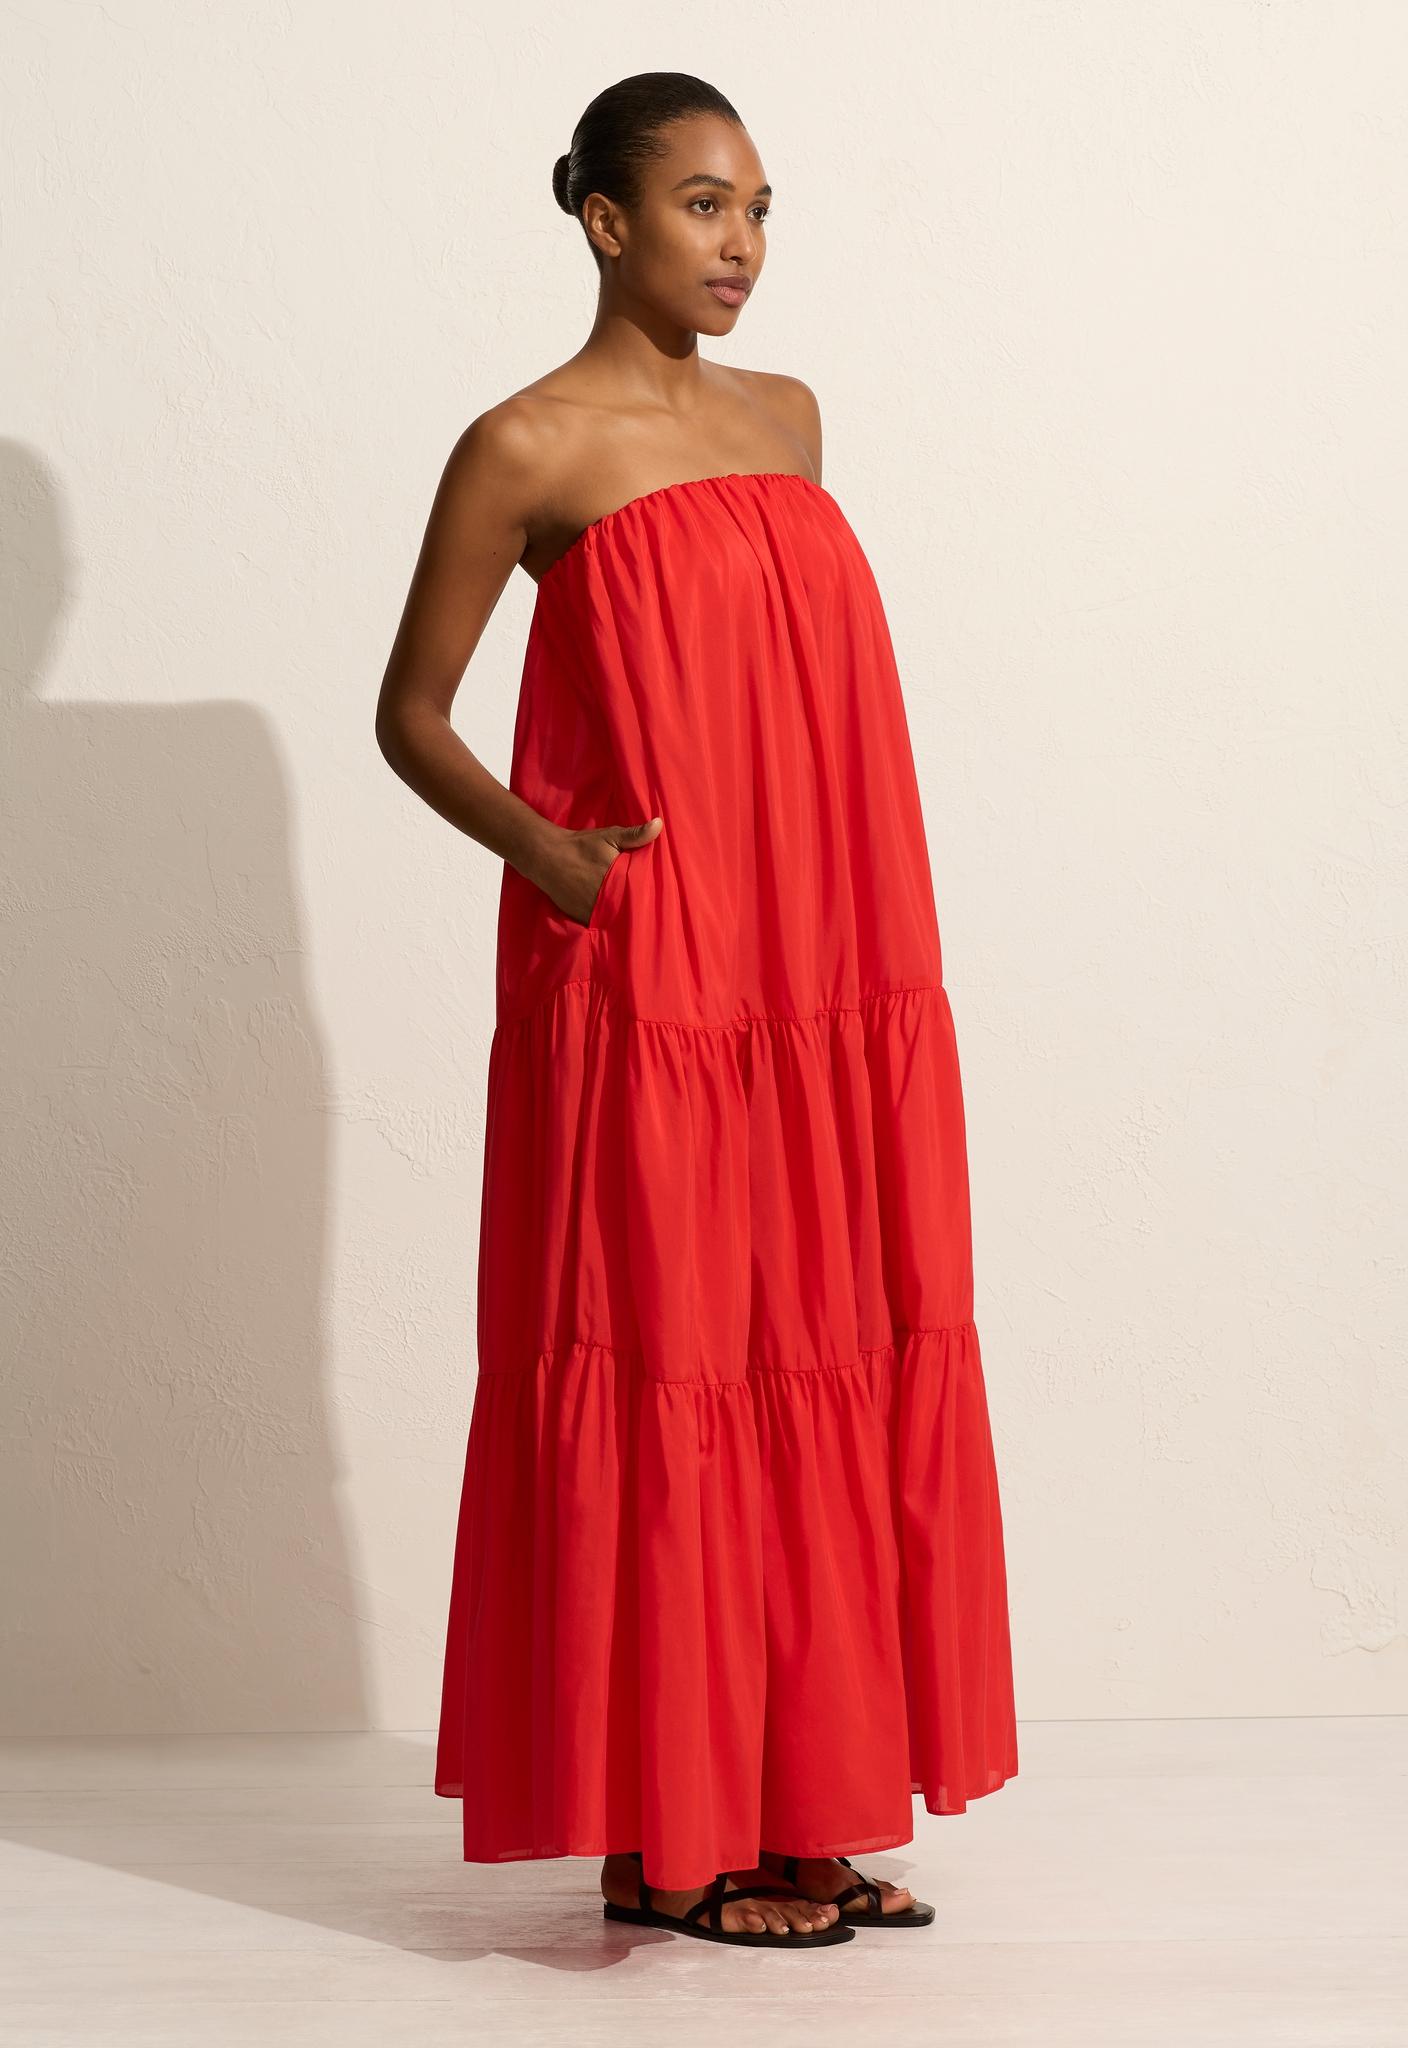 Voluminous Strapless Tiered Dress - Rosso - Matteau